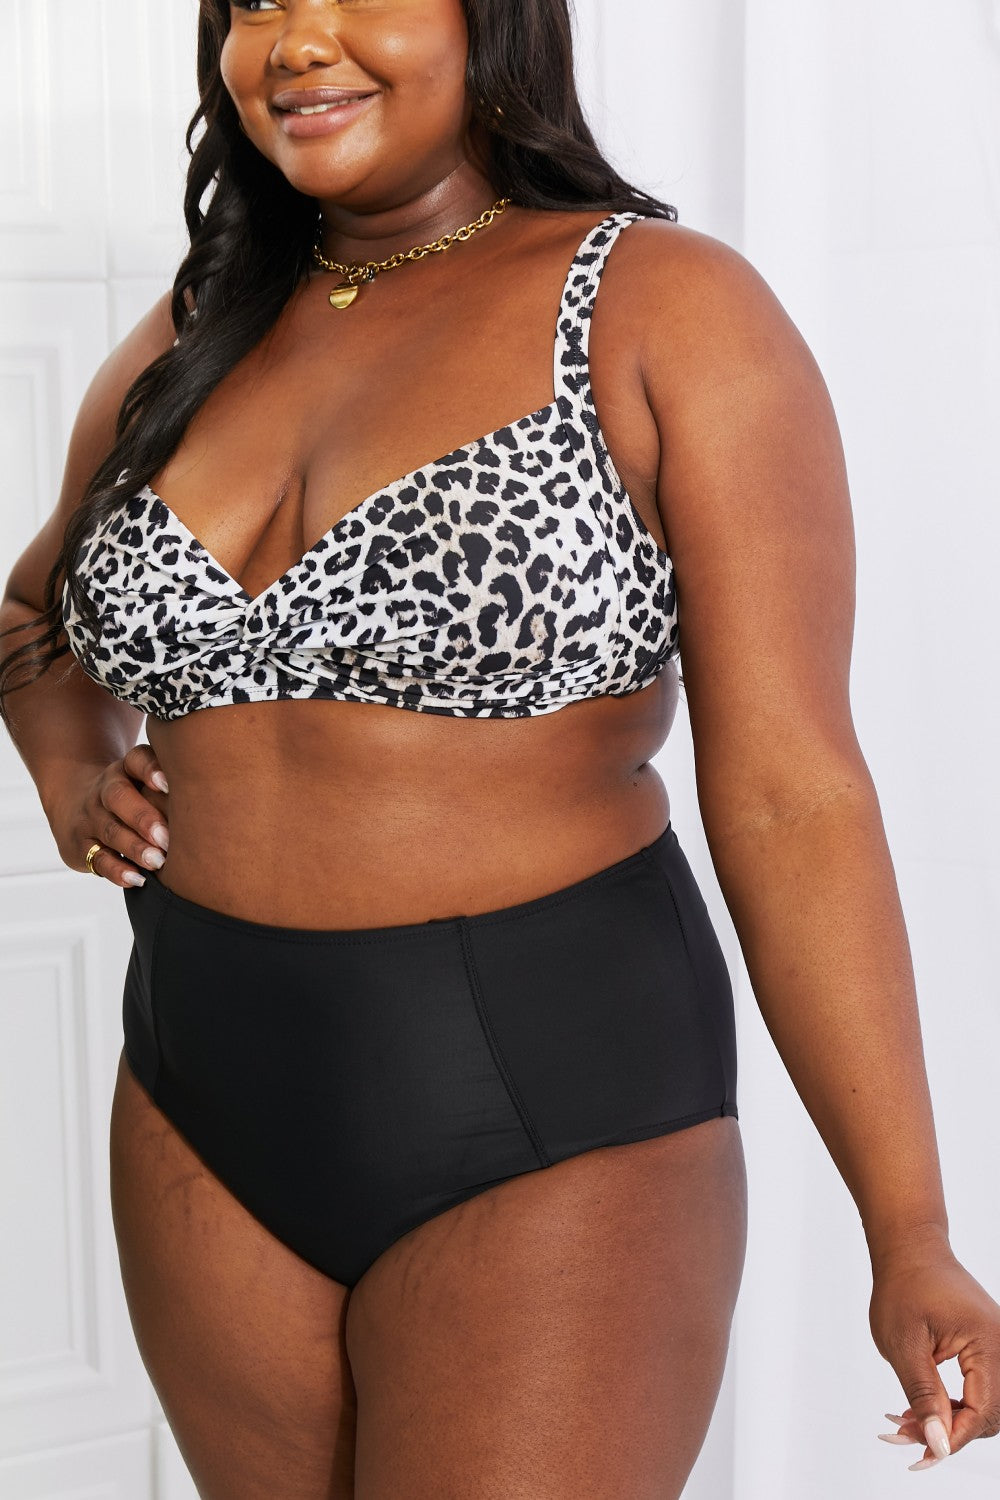 Marina West Swim Take A Dip Twist High-Rise Bikini in Leopard Print on any thing USA/STOD clothes